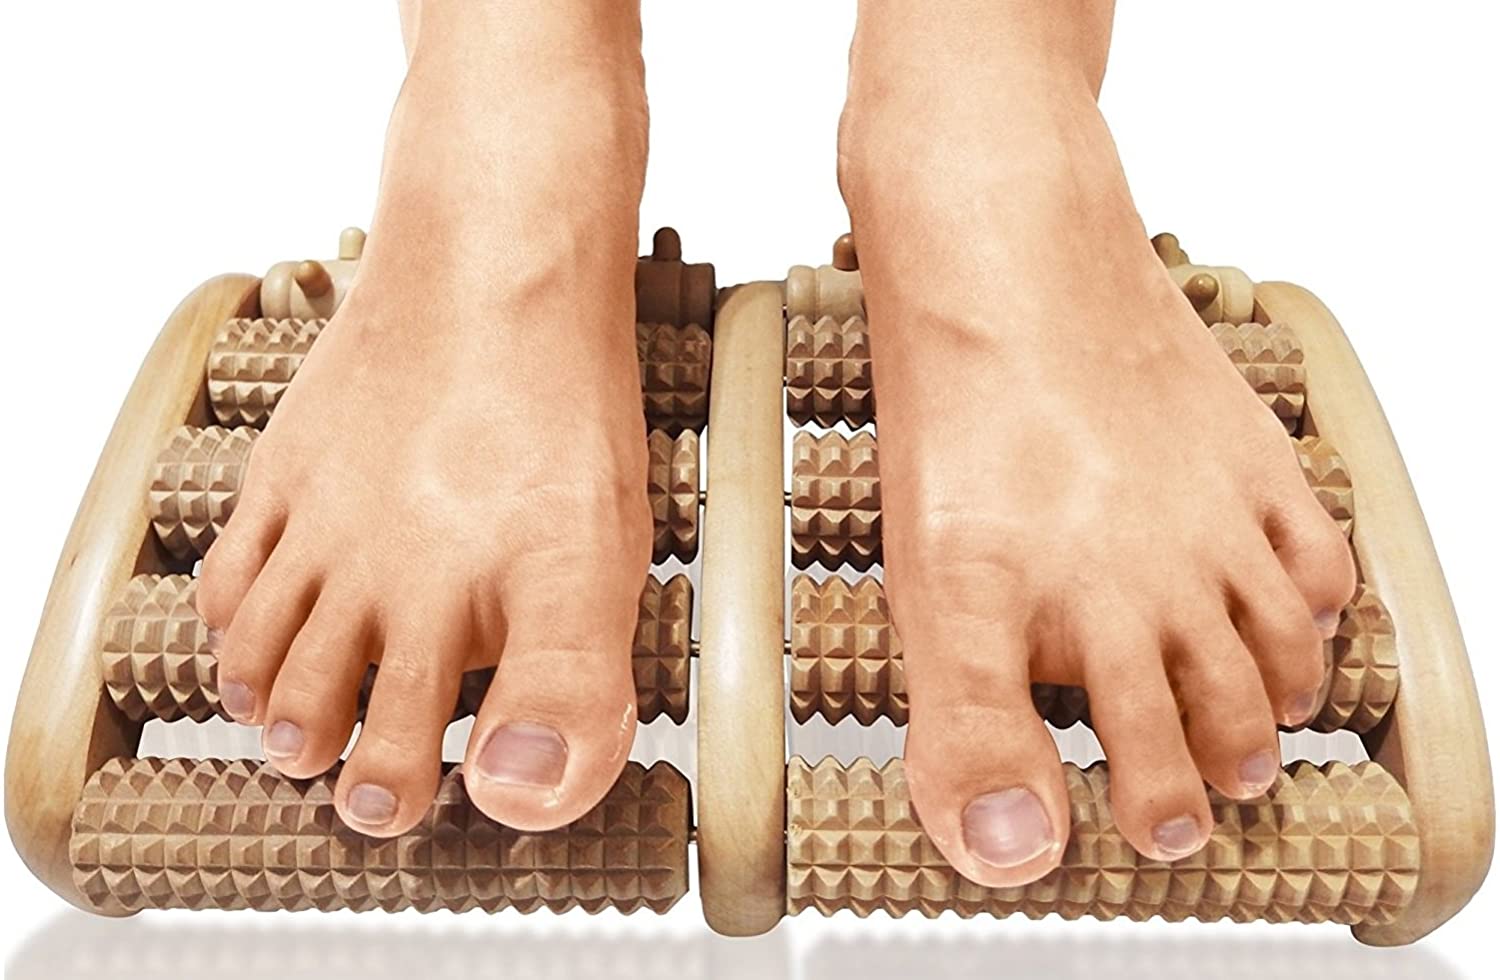 Benefits of foot massage for plantar fasciitis